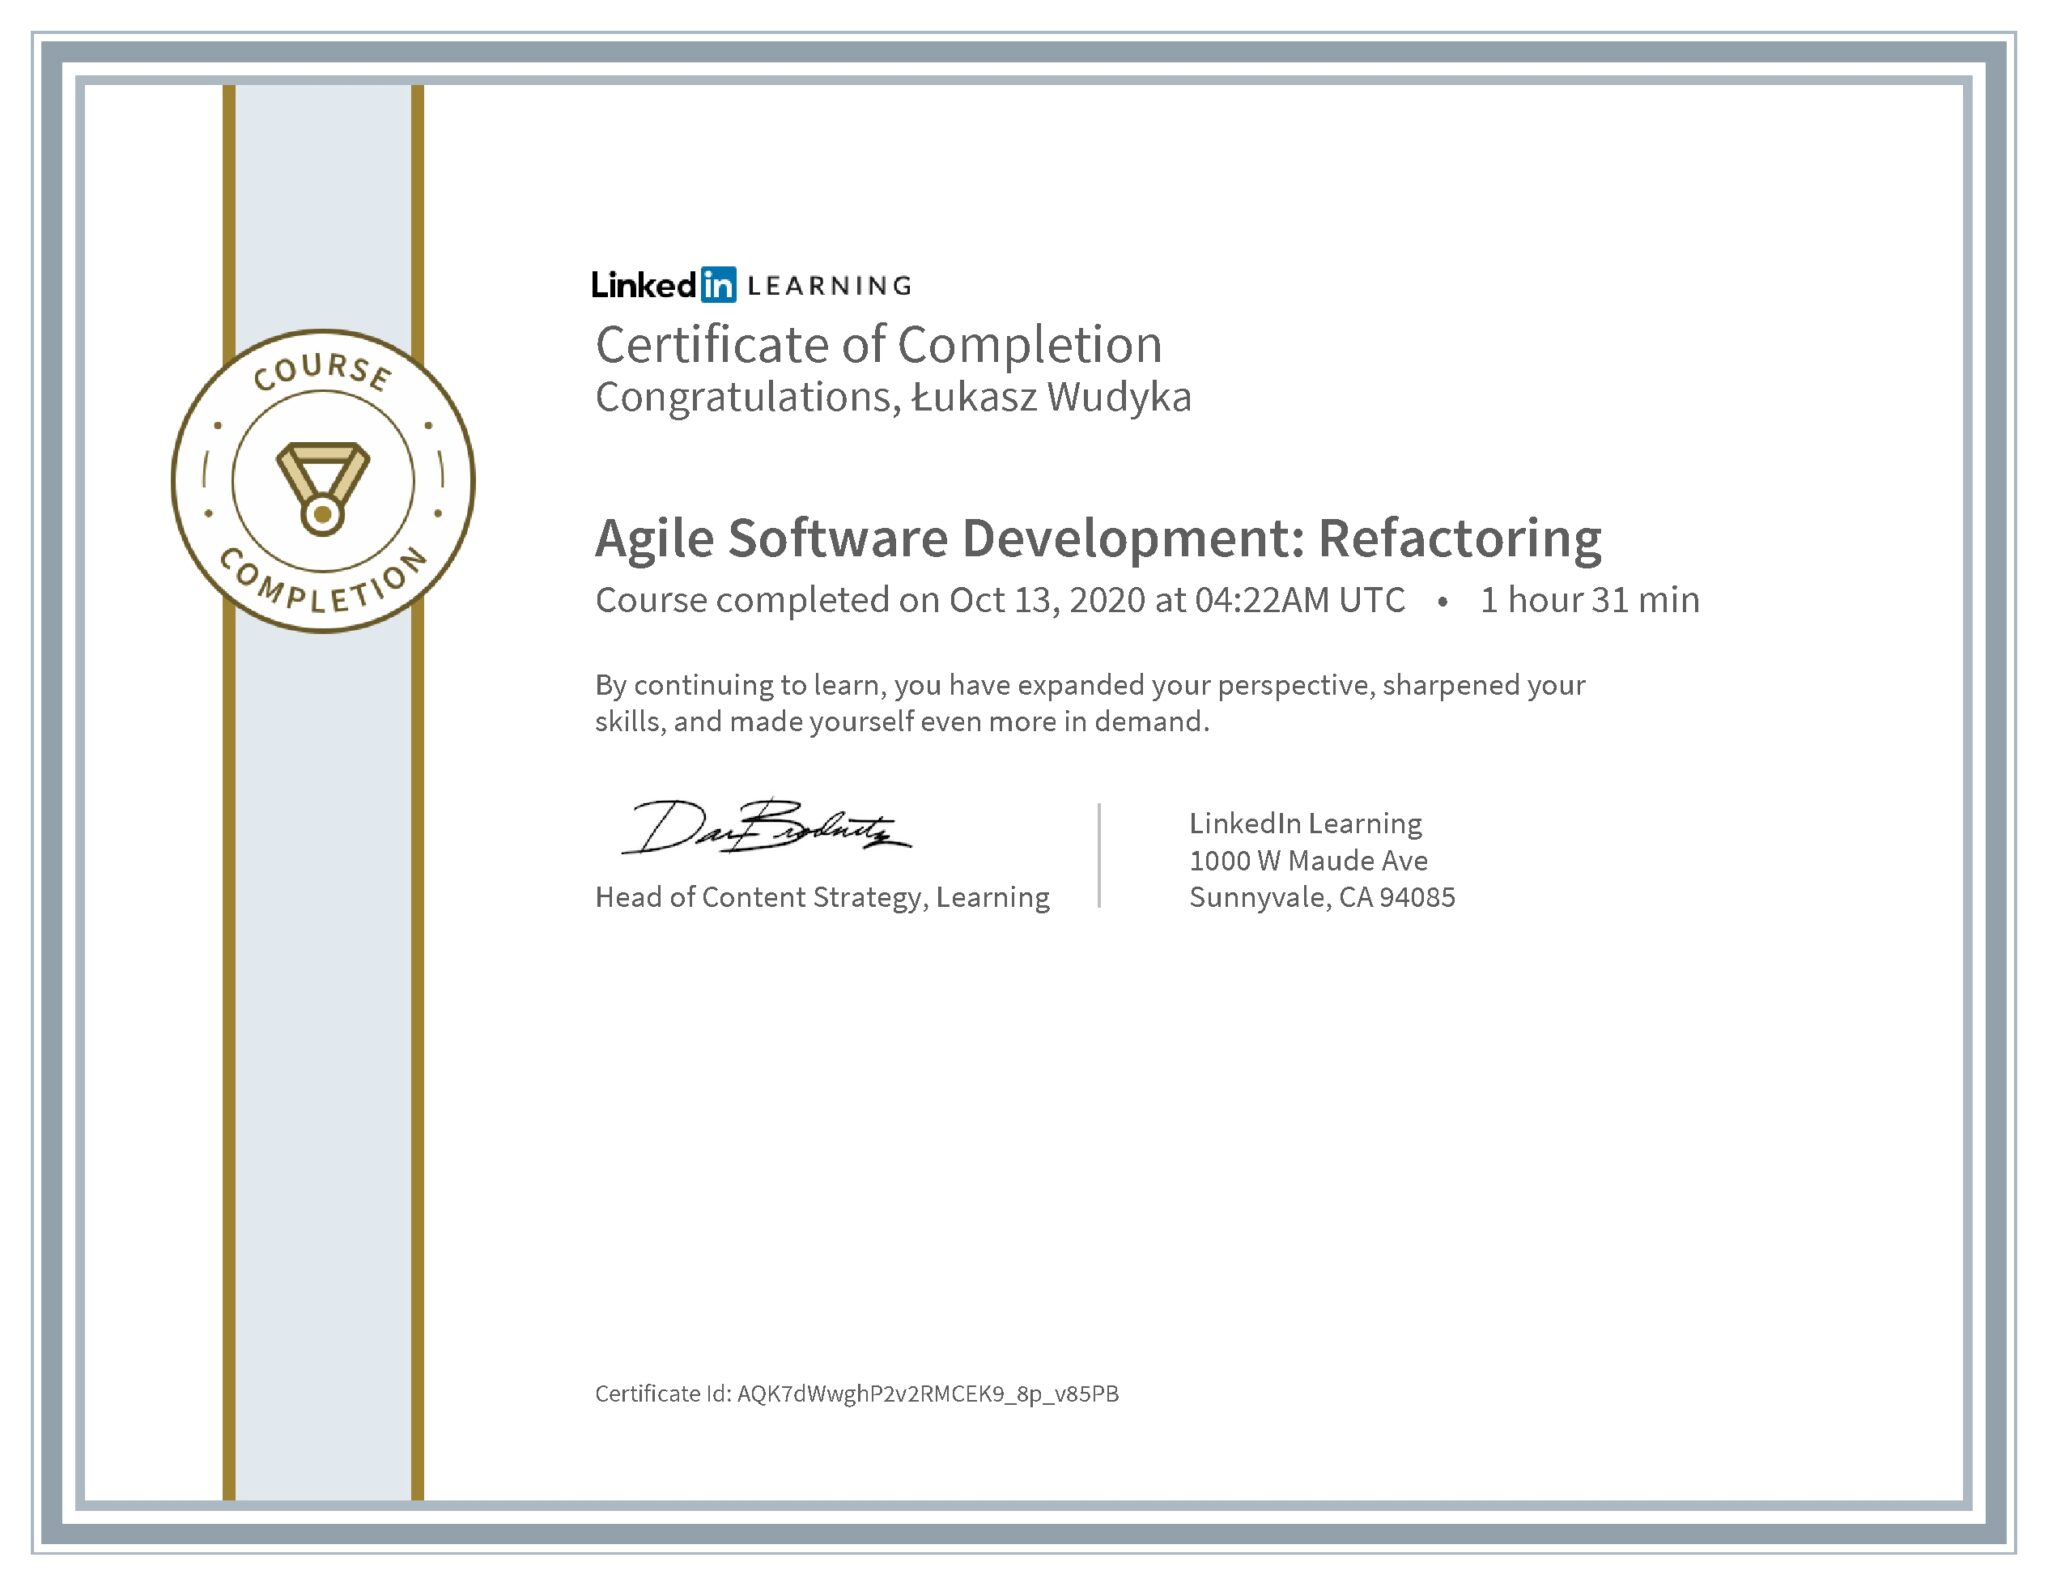 Łukasz Wudyka certyfikat LinkedIn Agile Software Development: Refactoring